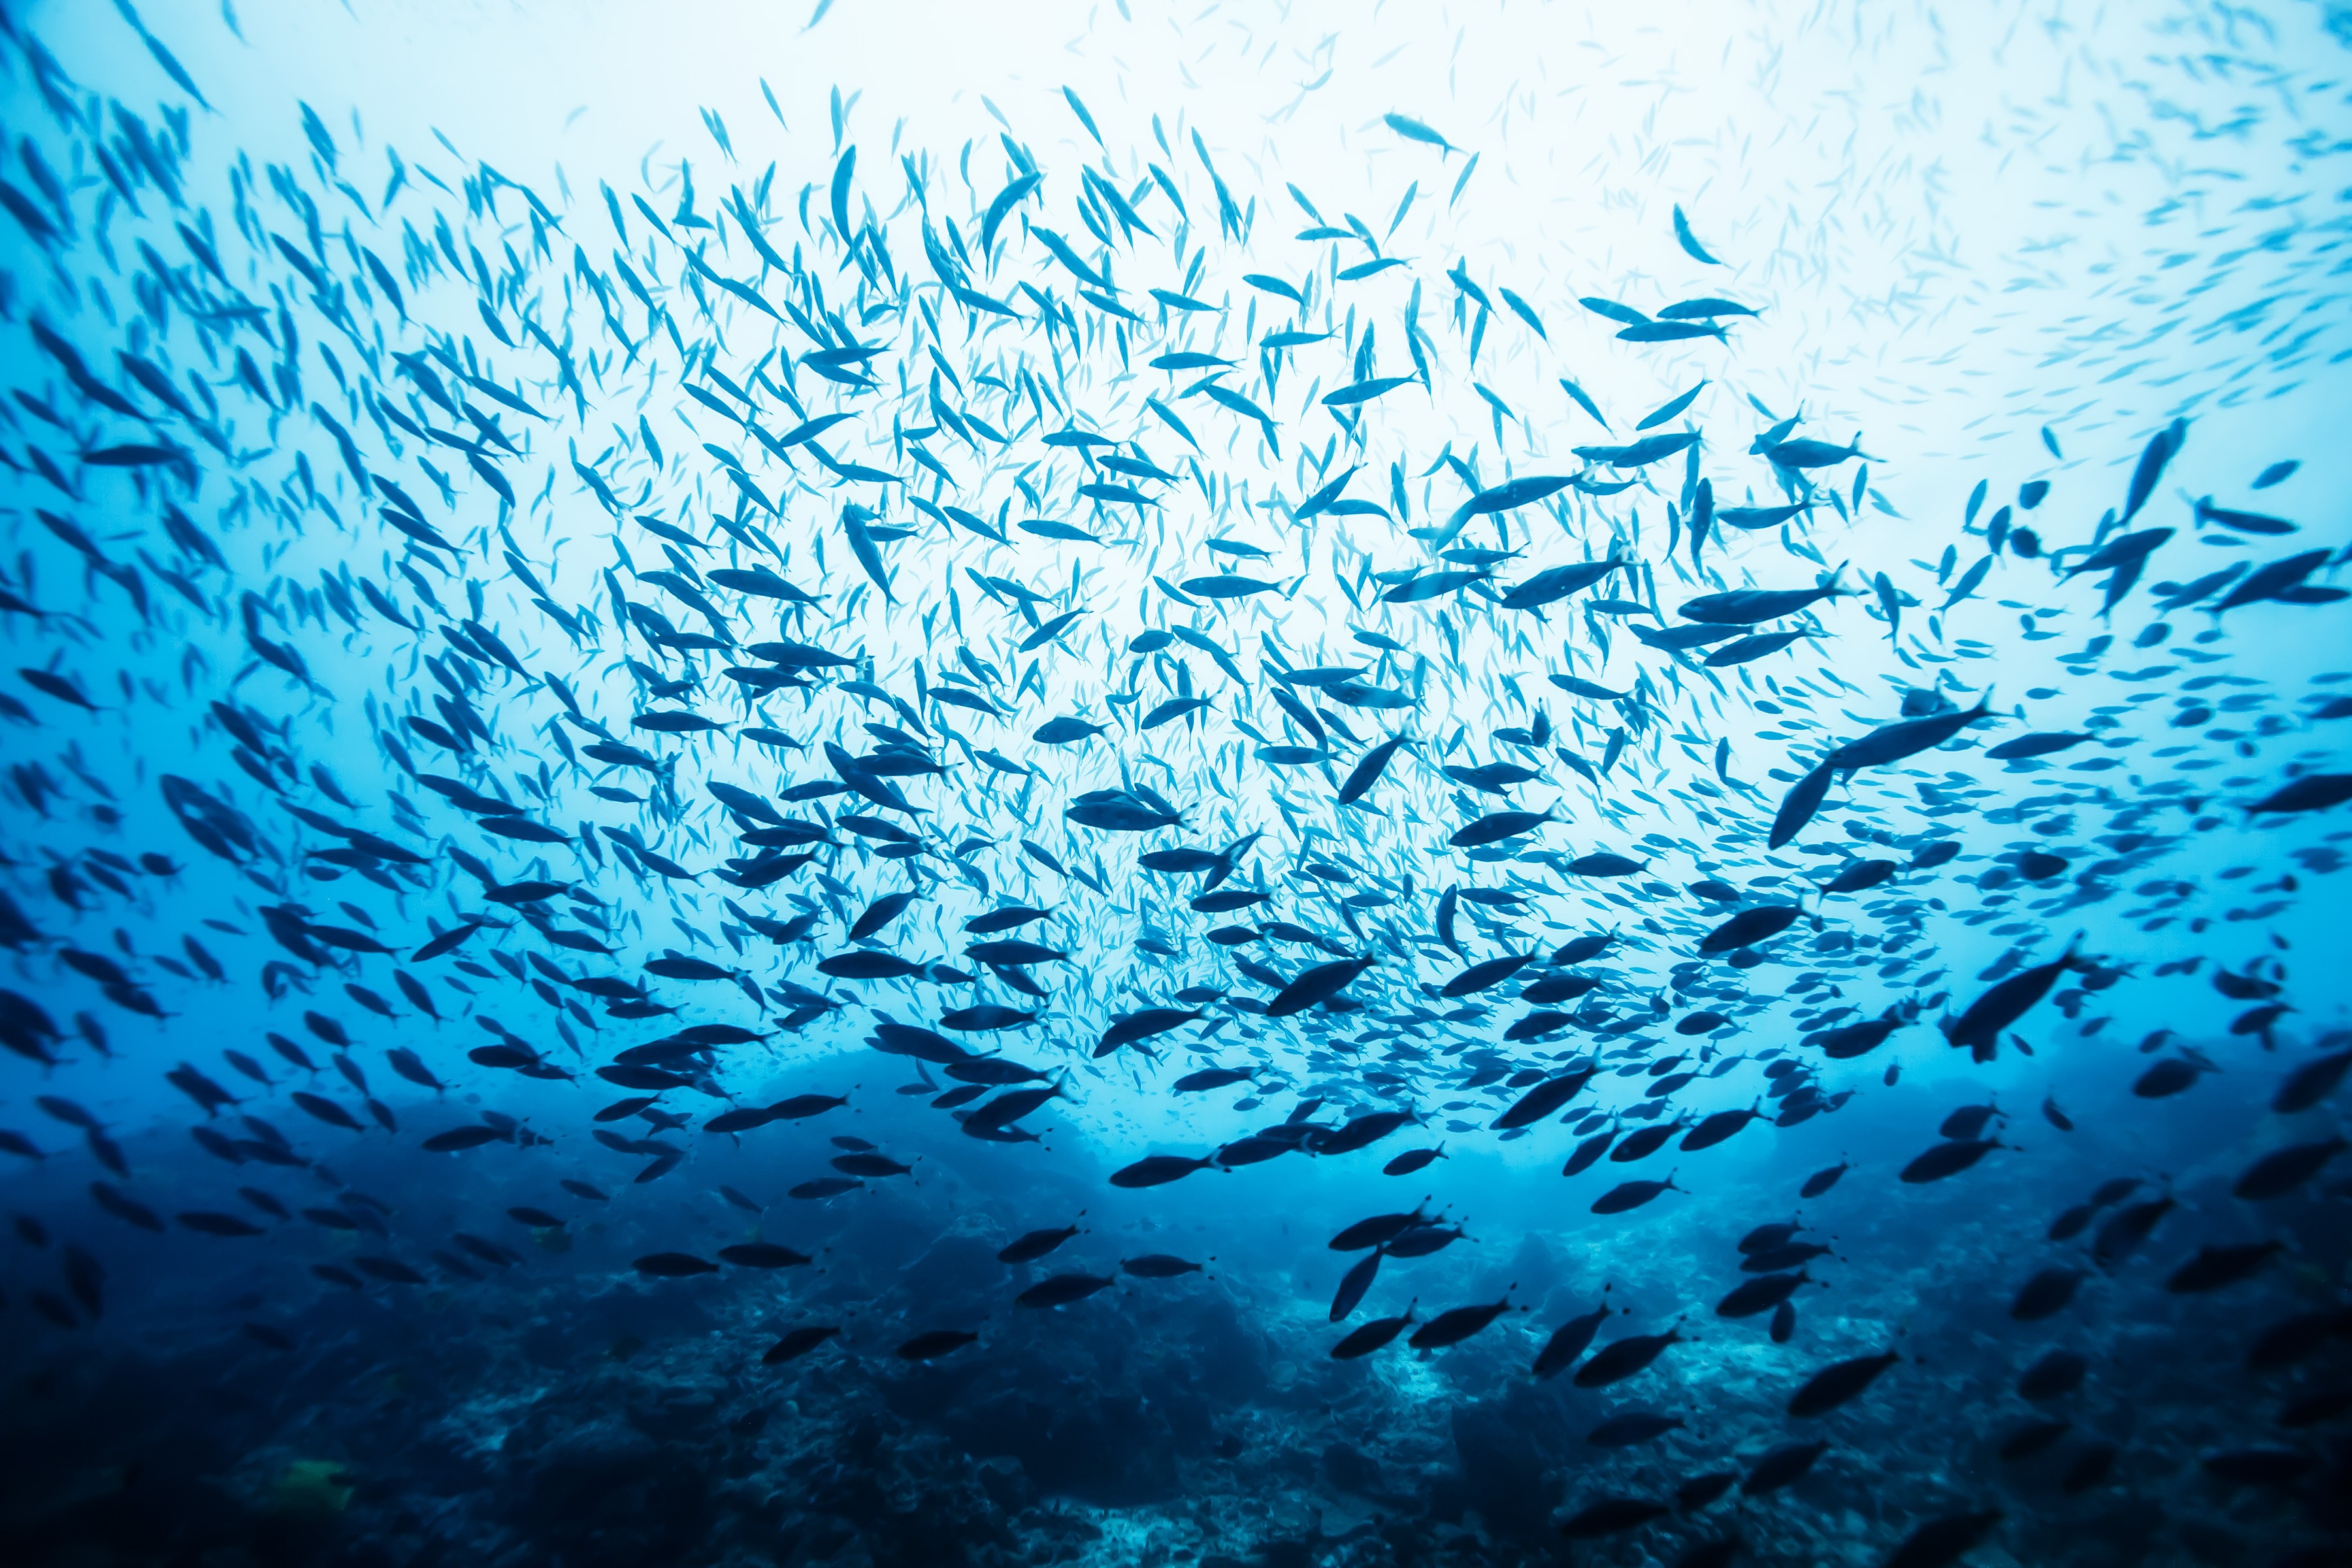 The economics of restoring fish populations.